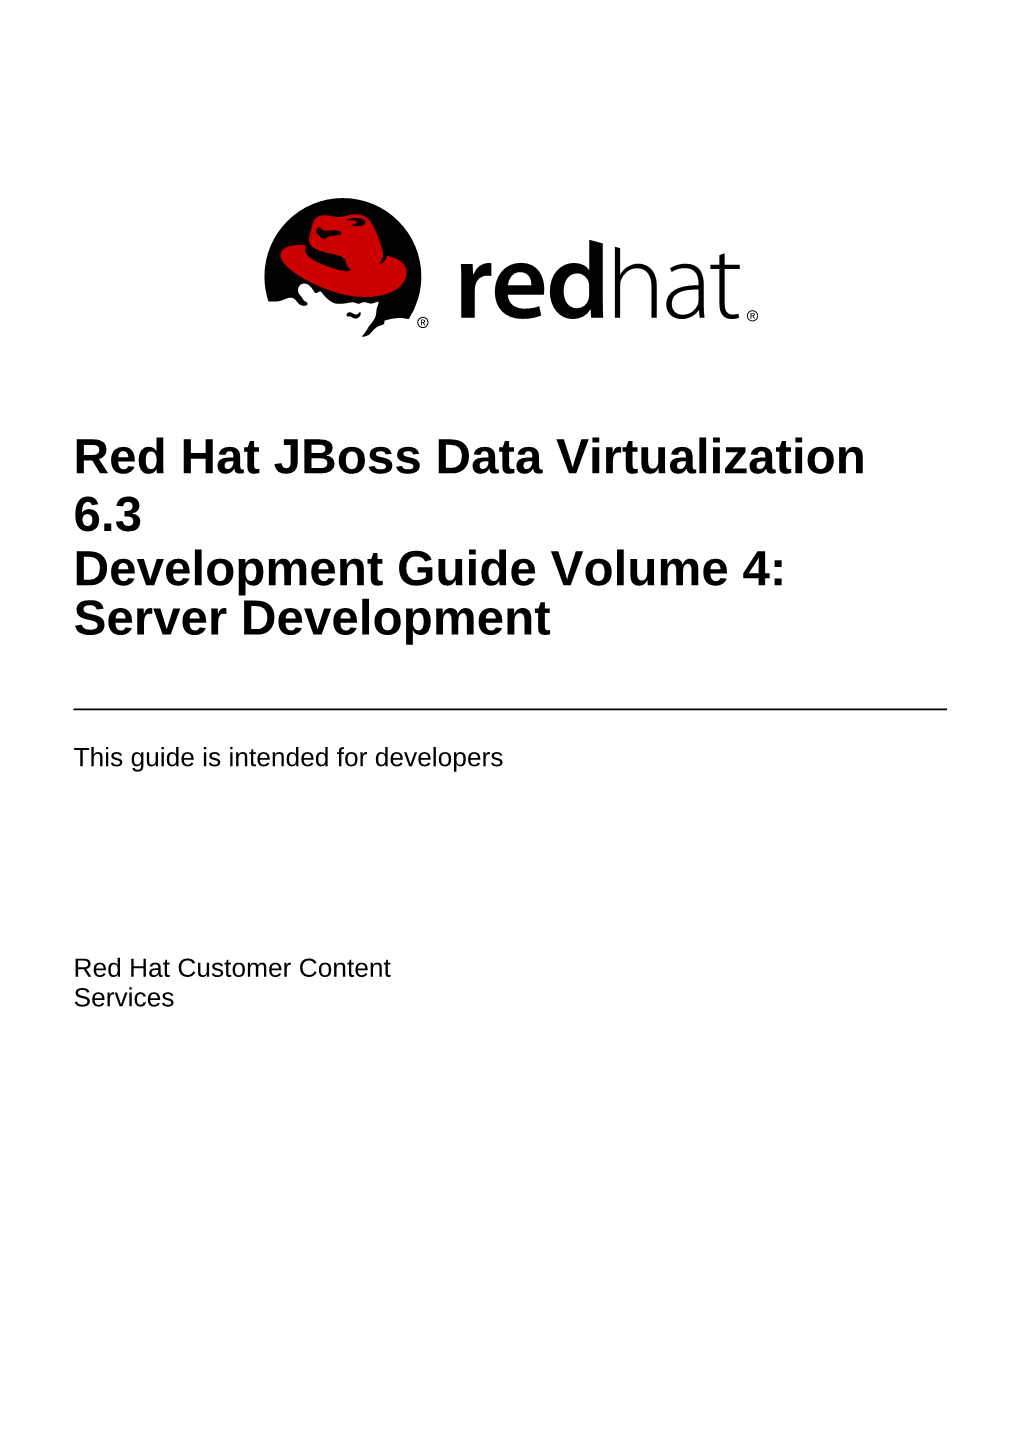 Development Guide Volume 4: Server Development